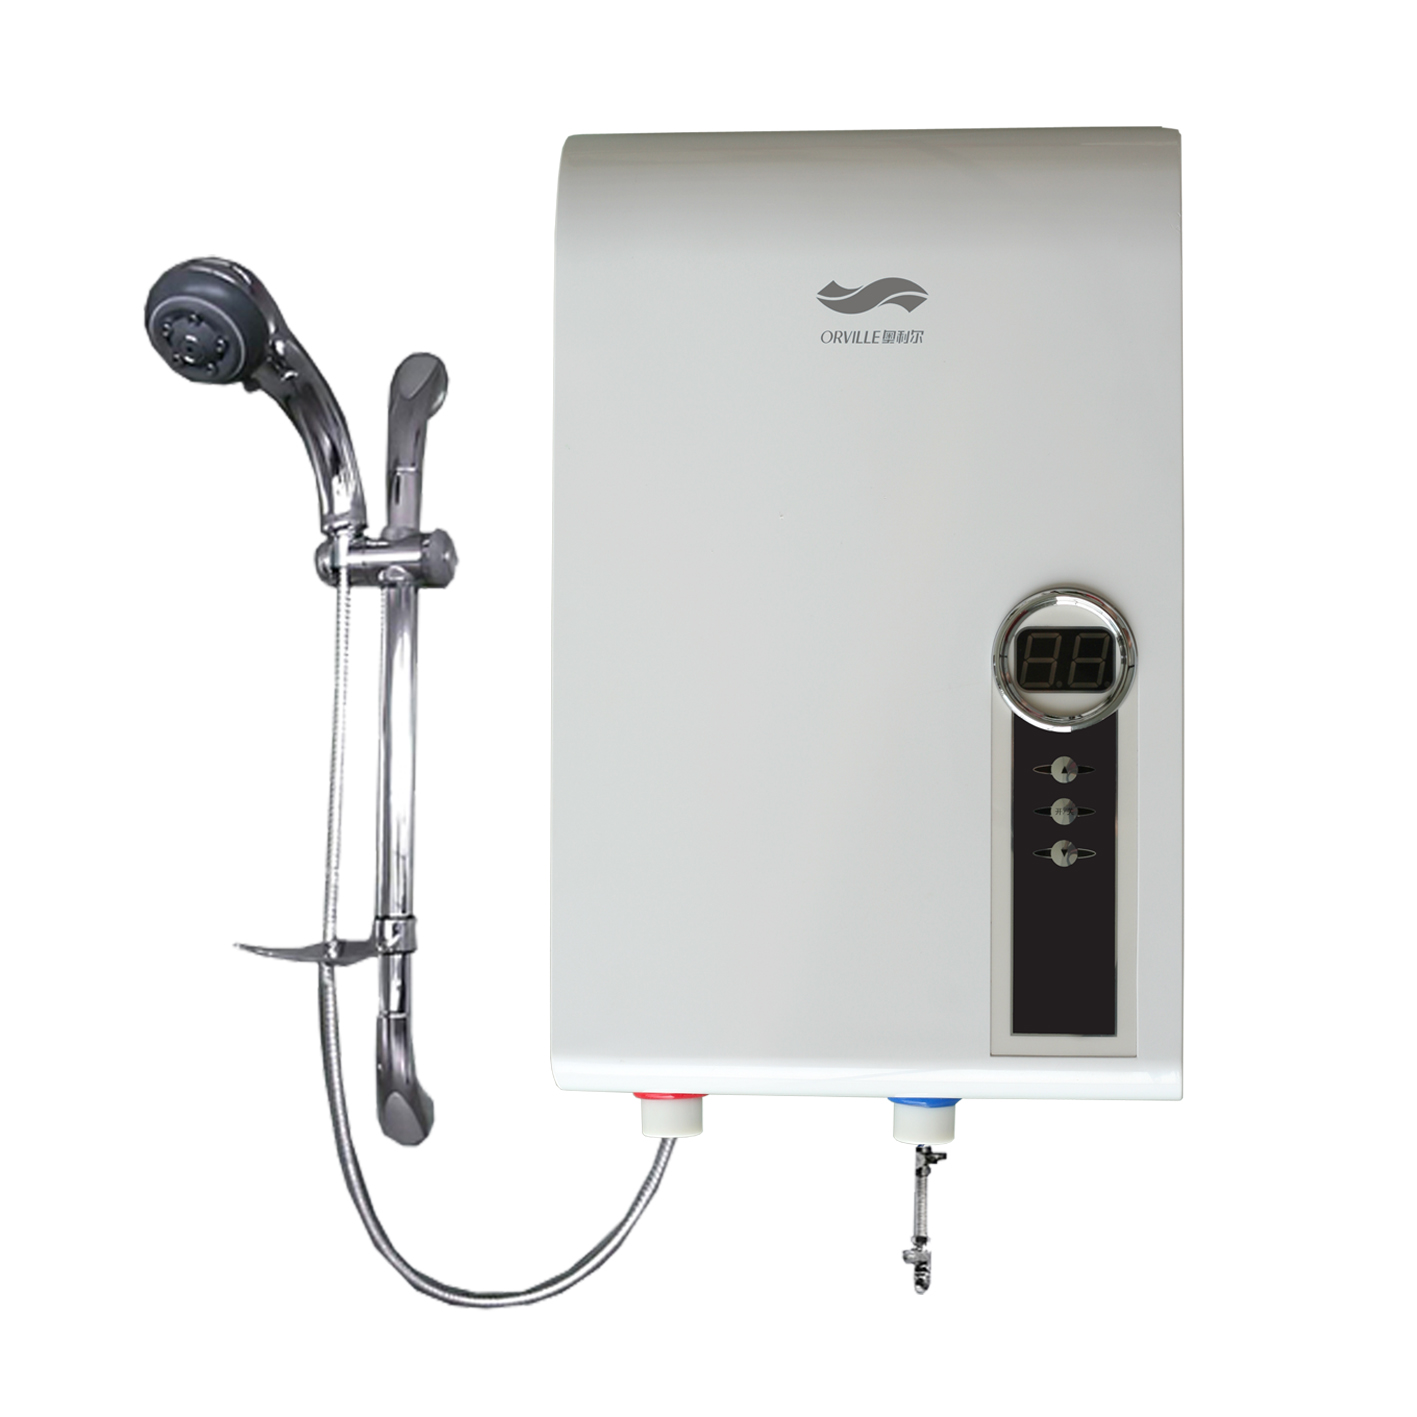 CCTV热卖 正品奥利尔ALR-D85 电热水器即热式洗澡 超值